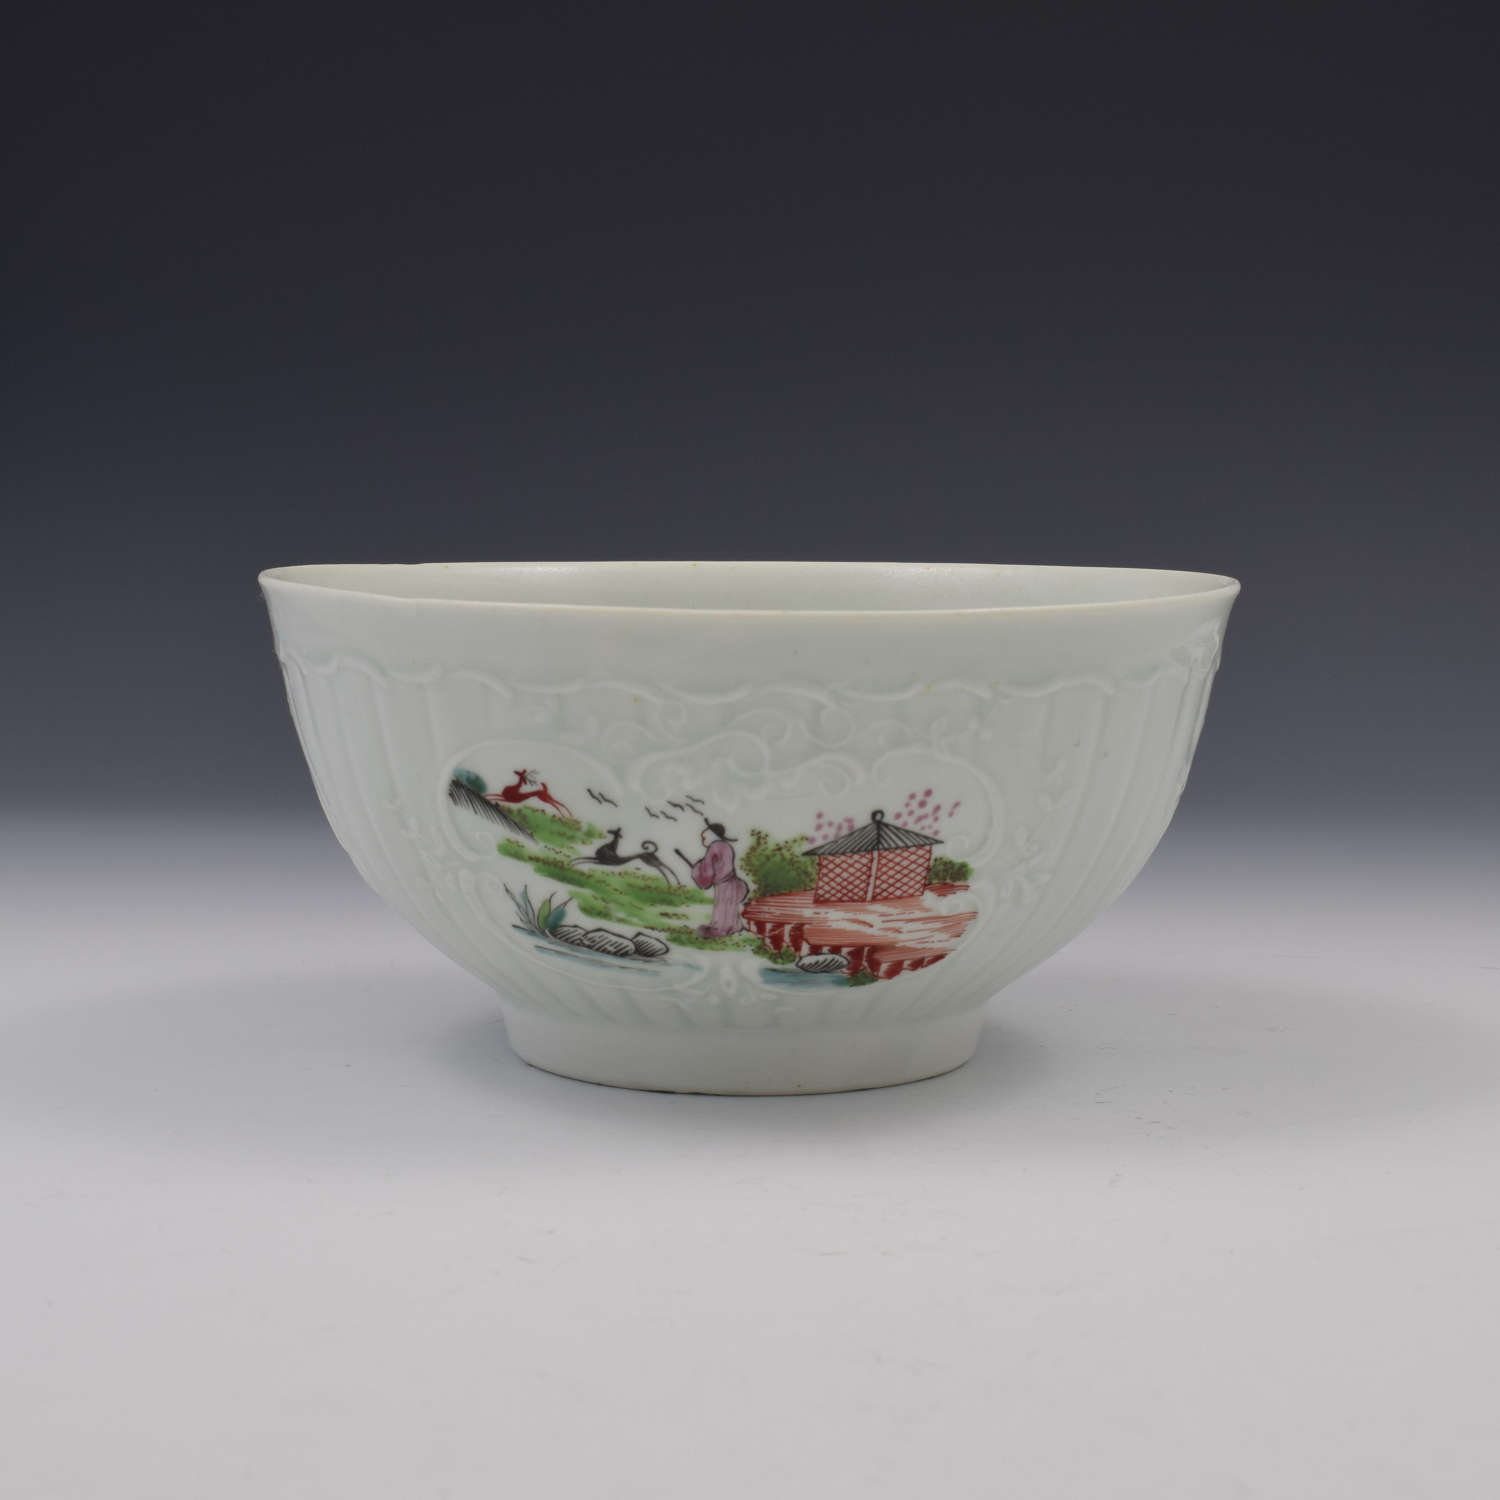 Early Period Worcester Porcelain Stag Hunt Moulded Slop Bowl c.1755